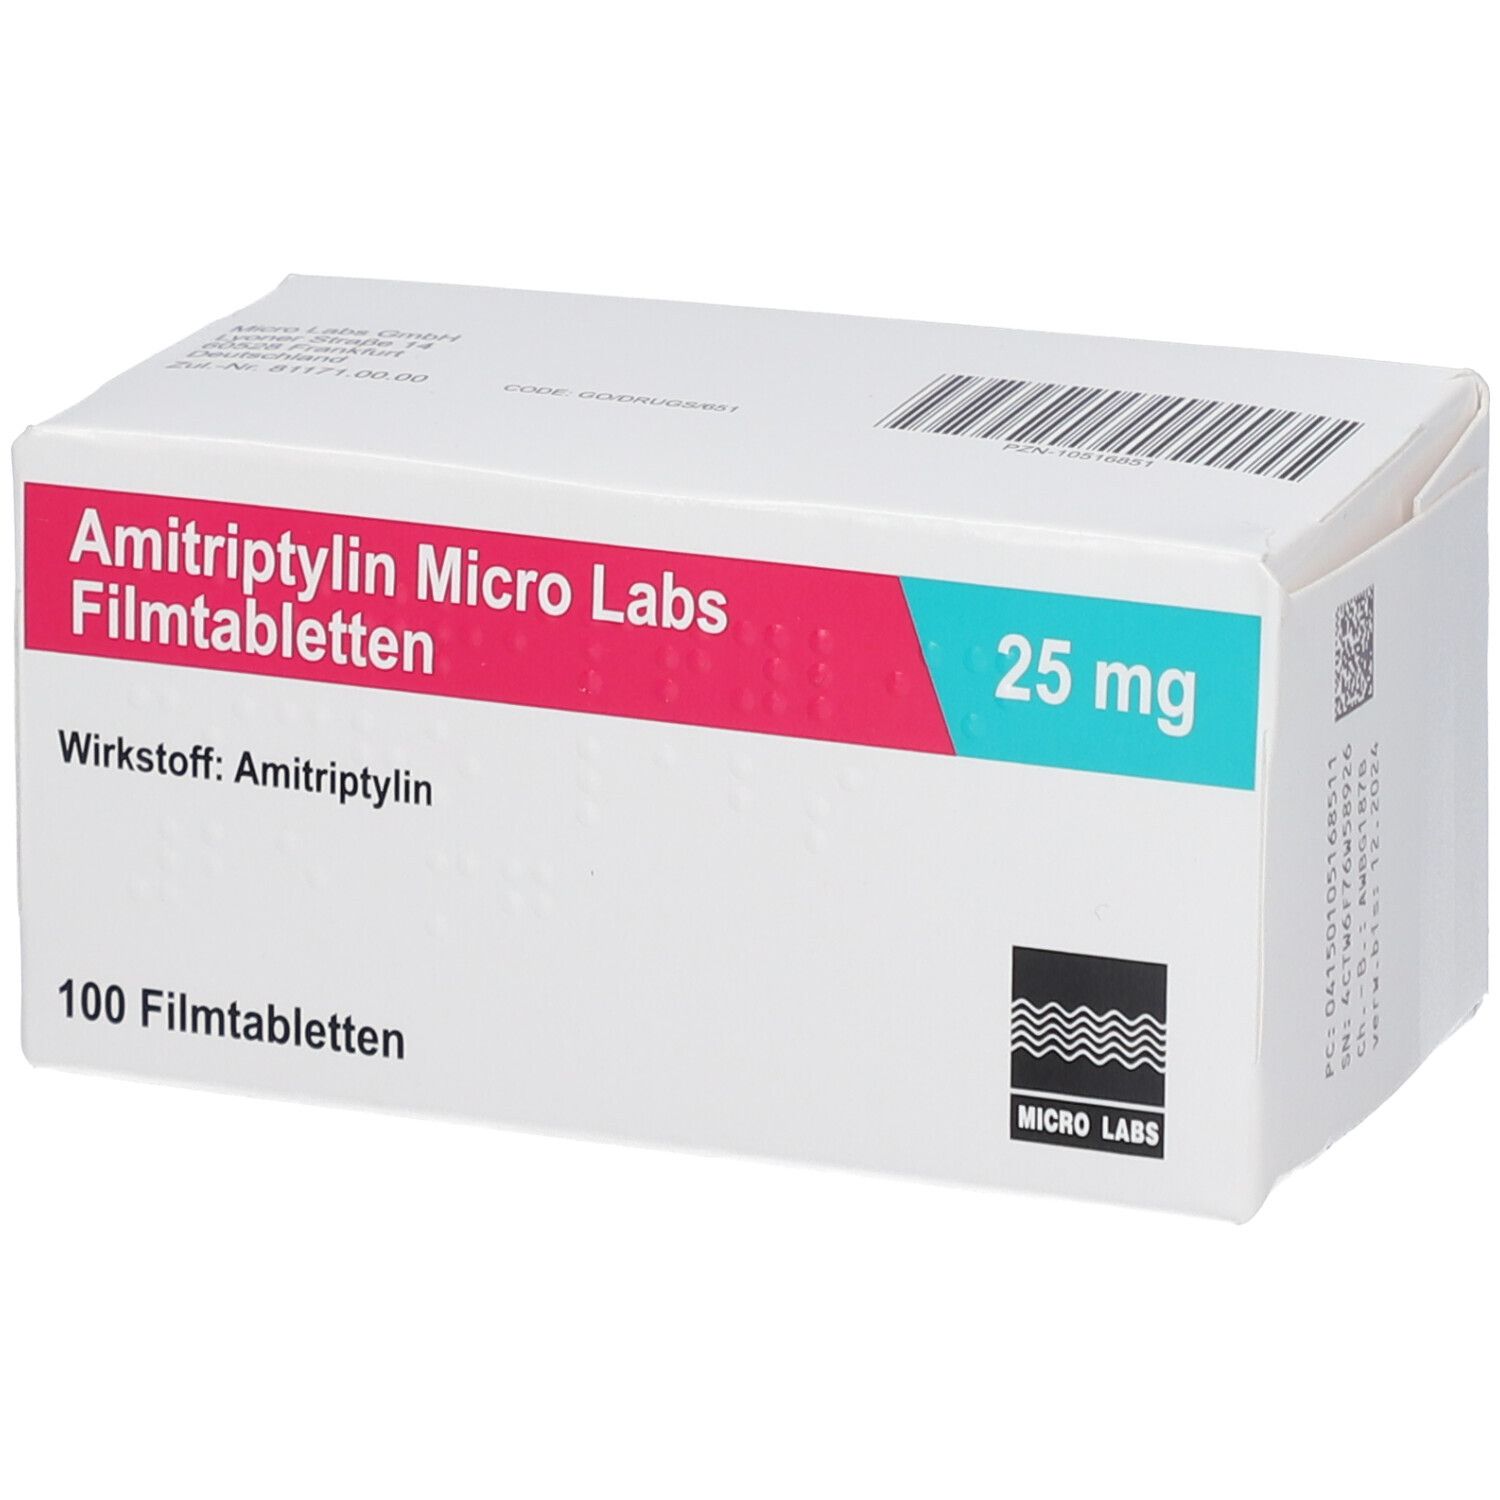 Amitriptylin Micro Labs 25 mg